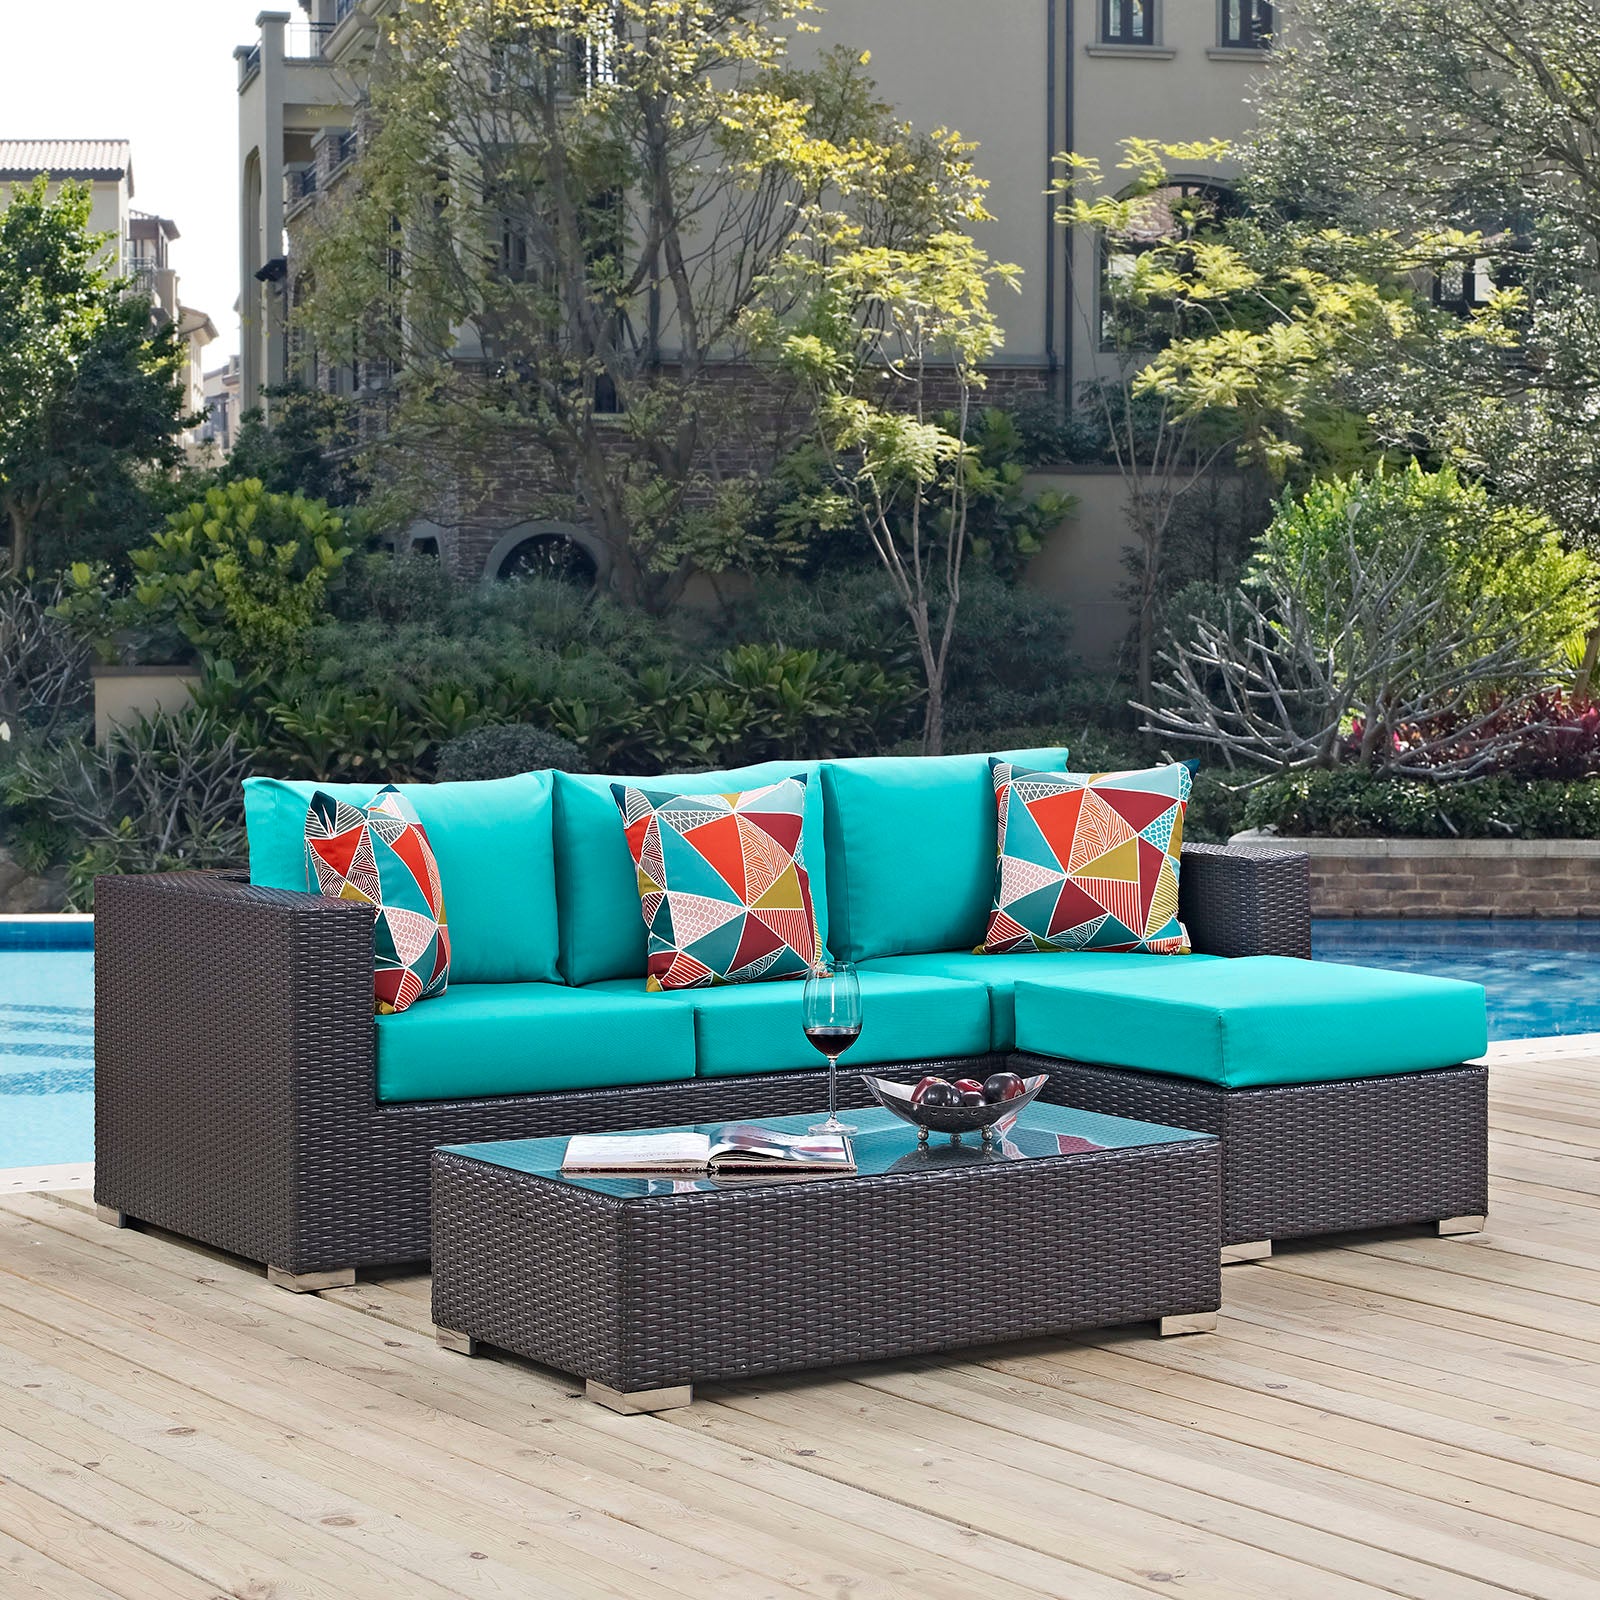 Modway Outdoor Conversation Sets - Convene 3 Piece Outdoor Patio Sofa Set Espresso Turquoise